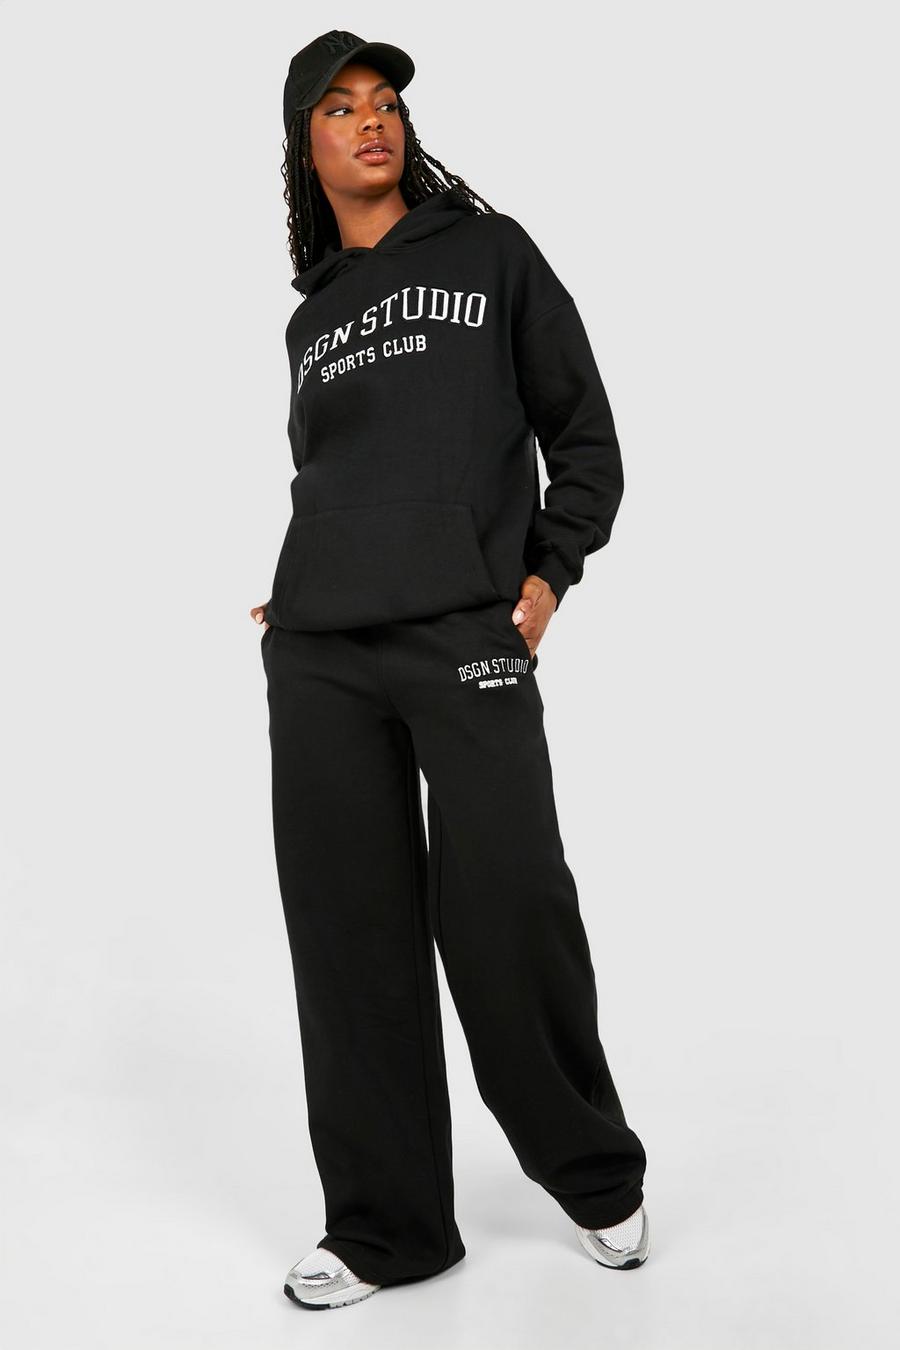 Pantalón deportivo Tall de pernera recta con aplique Dsgn Studio, Black